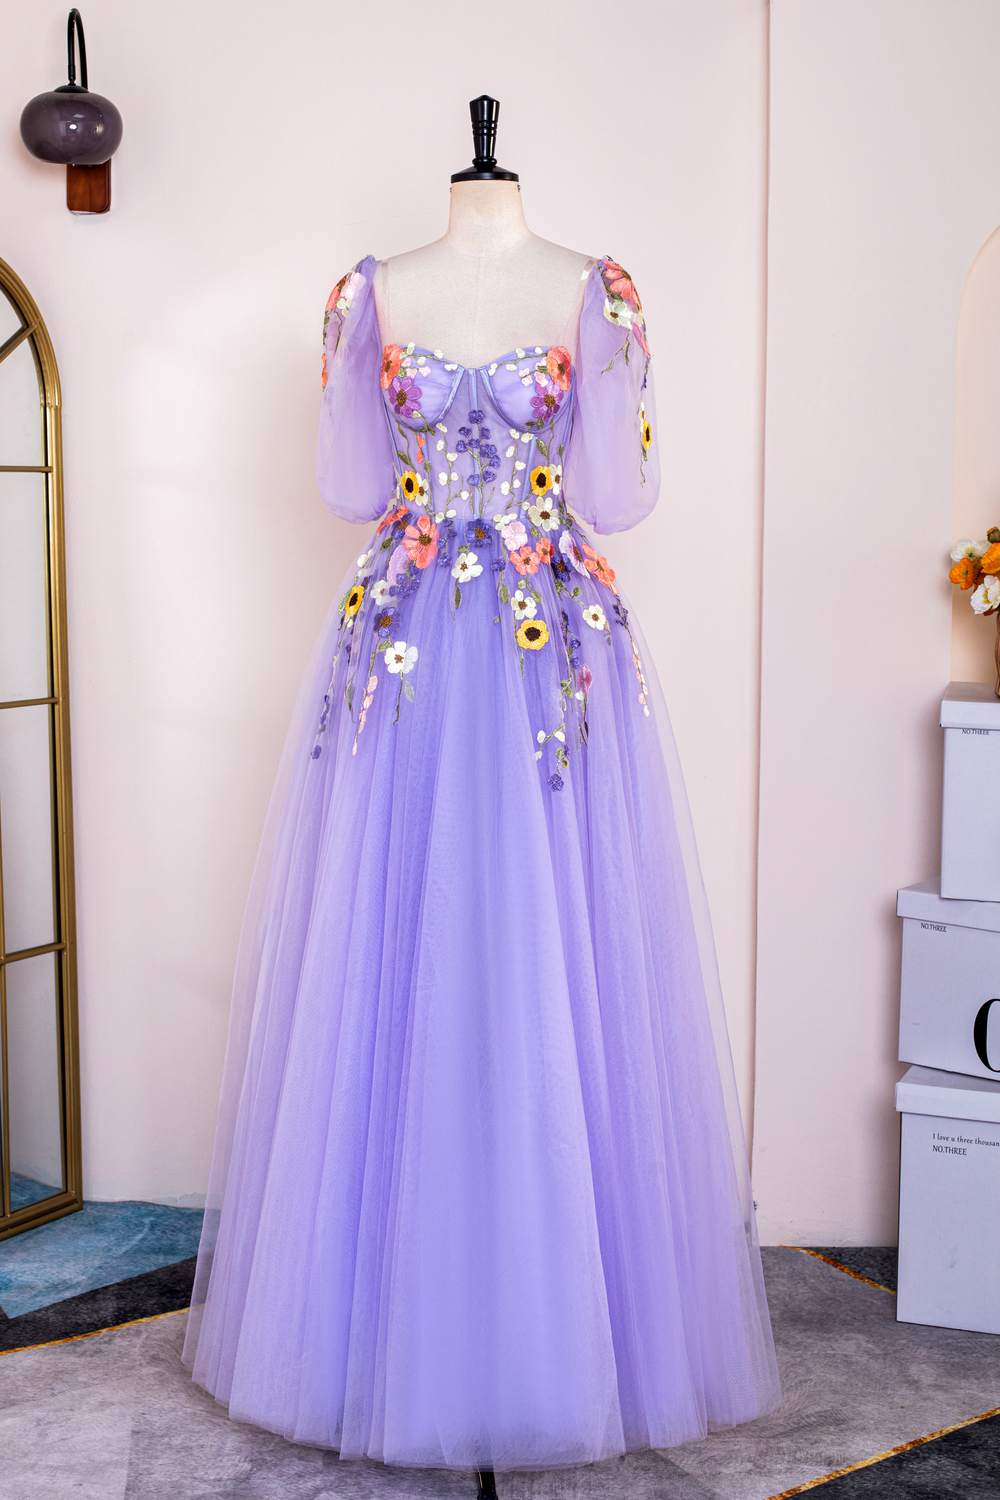 Miss Blumarine floral-appliqué puffball dress - Purple